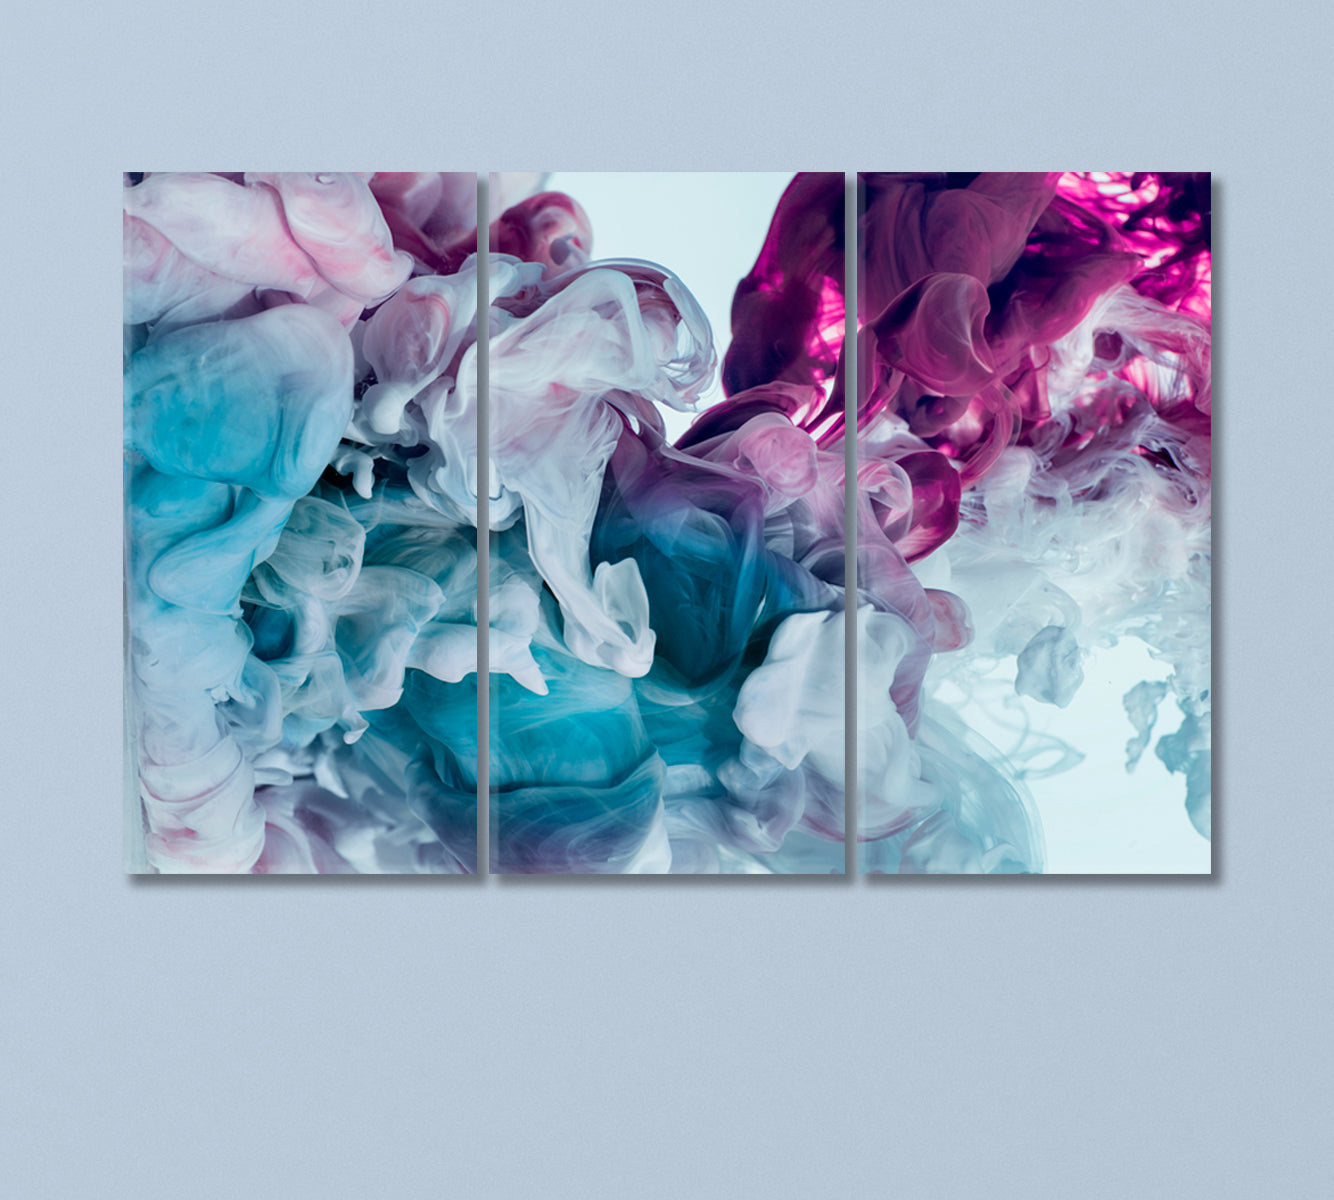 Abstract Blue and Purple Smoke Canvas Print-Canvas Print-CetArt-3 Panels-36x24 inches-CetArt